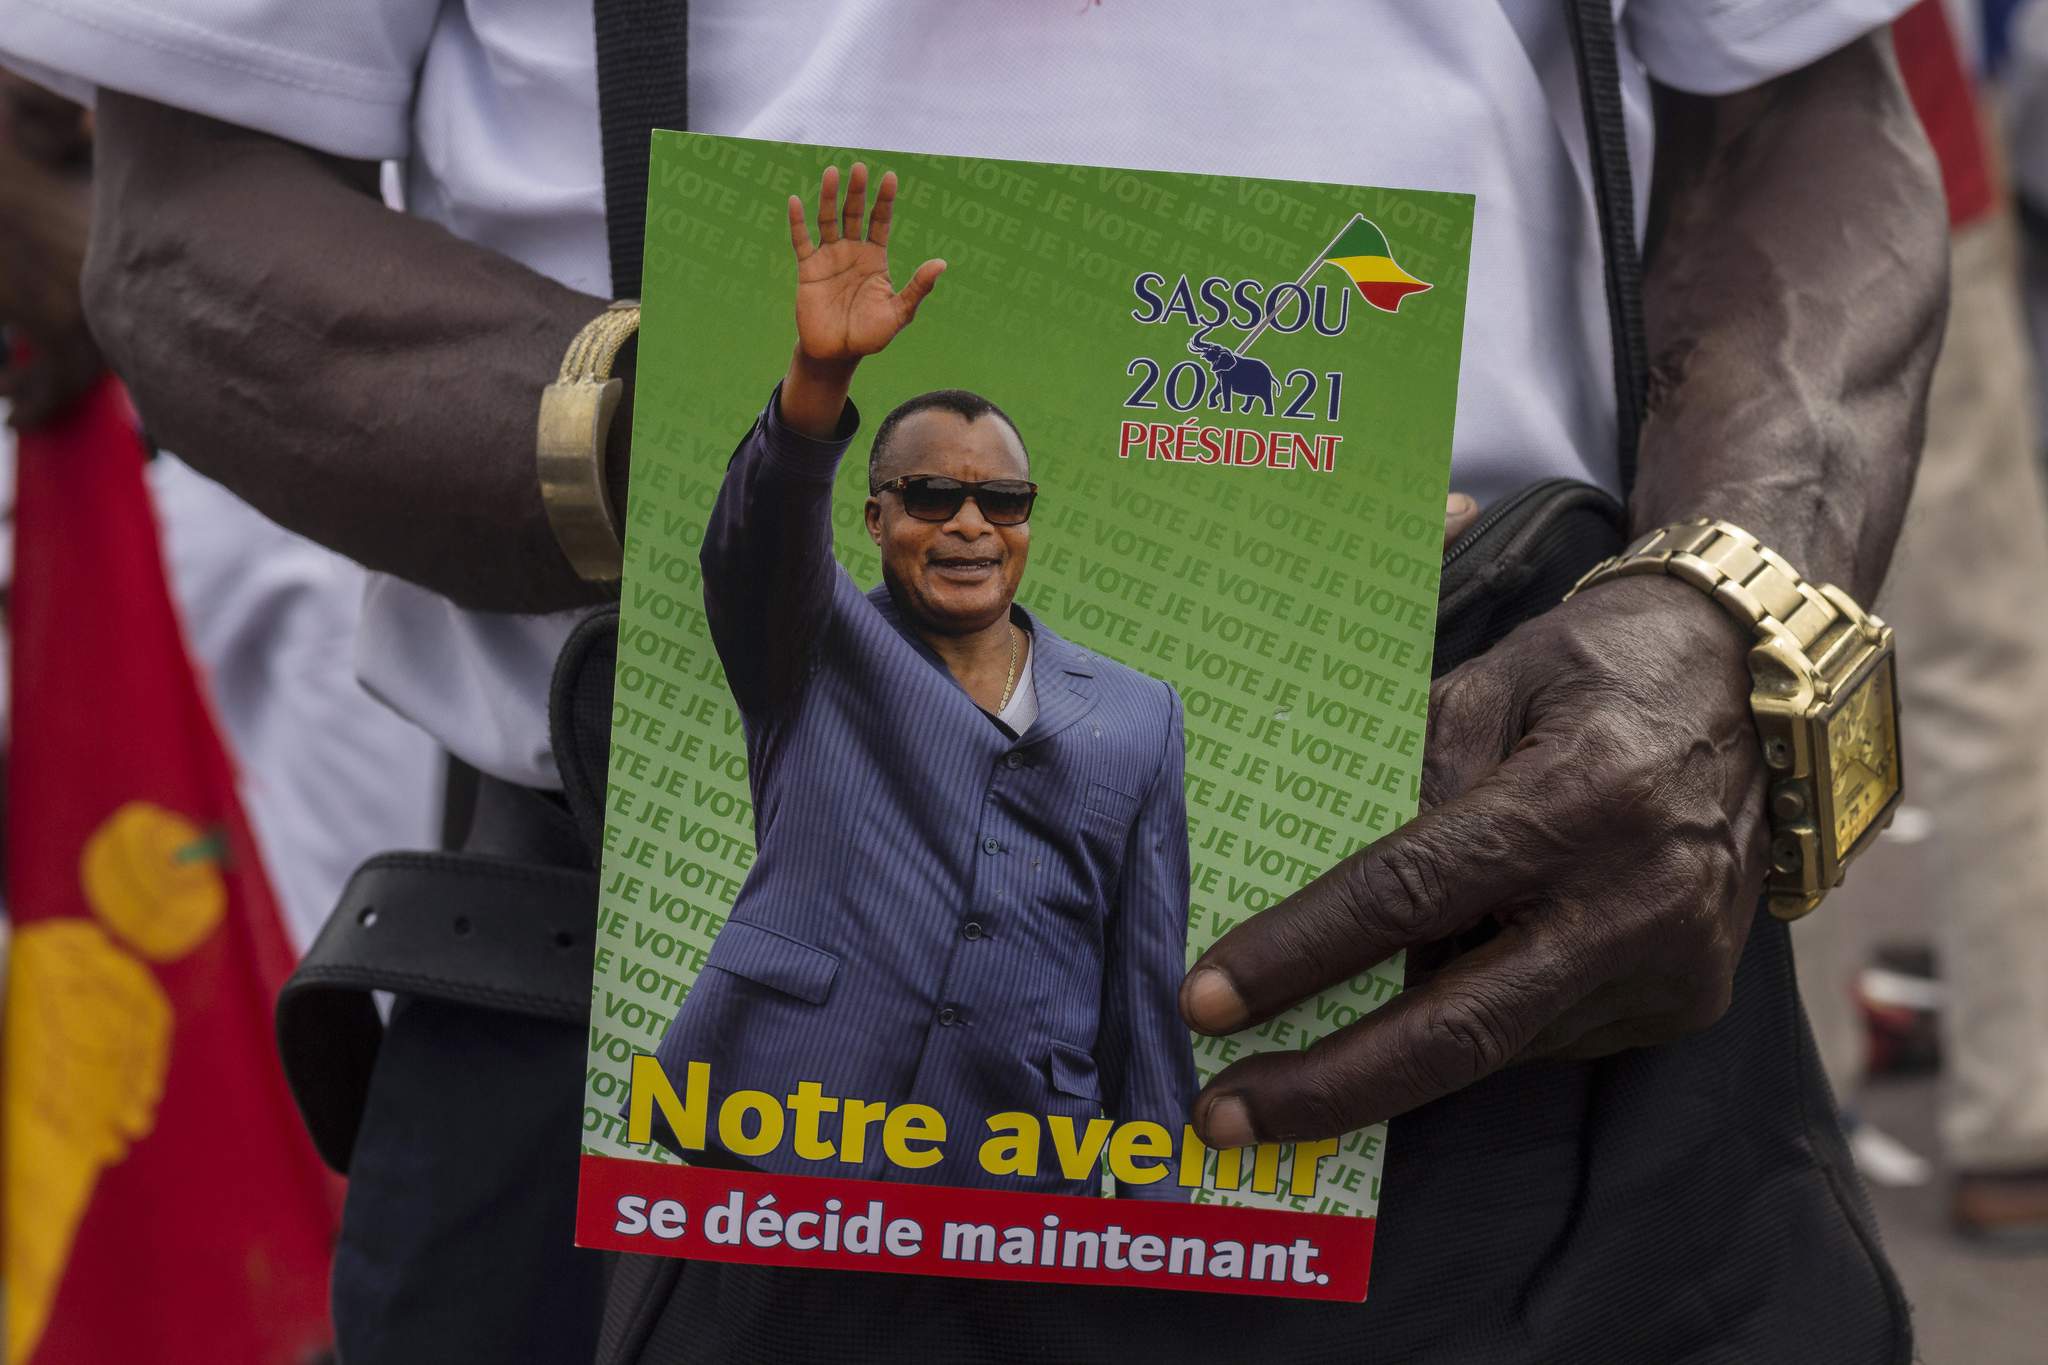 Republic of Congo President Sassou N'Guesso declared winner